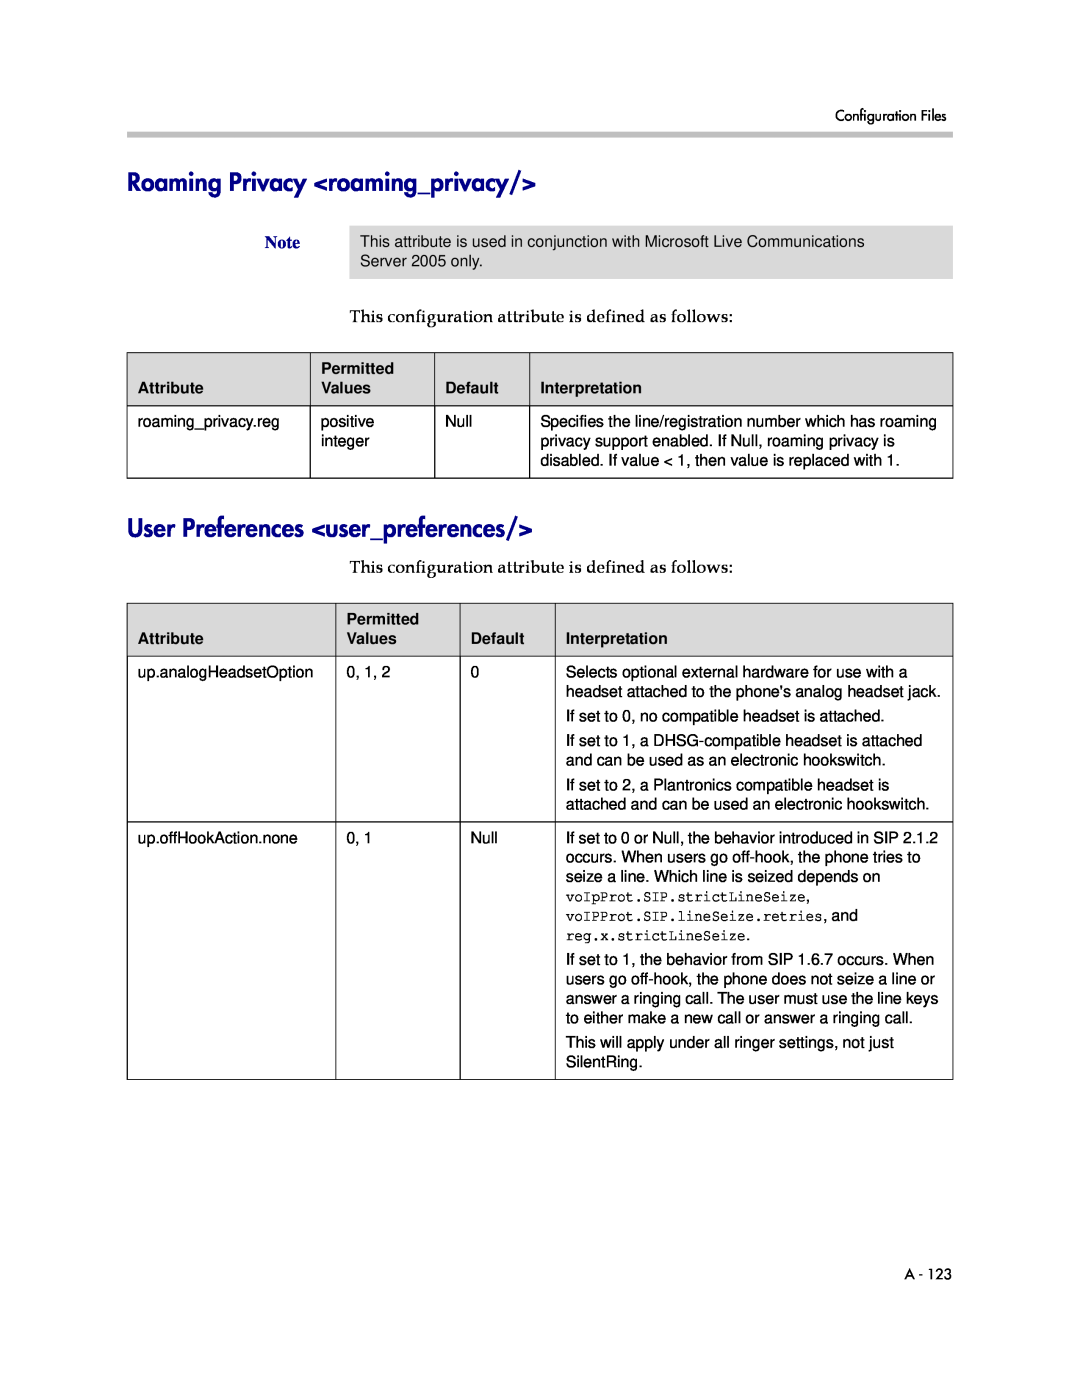 Polycom SIP 3.1 manual Roaming Privacy roamingprivacy, User Preferences userpreferences, voIpProt.SIP.strictLineSeize 